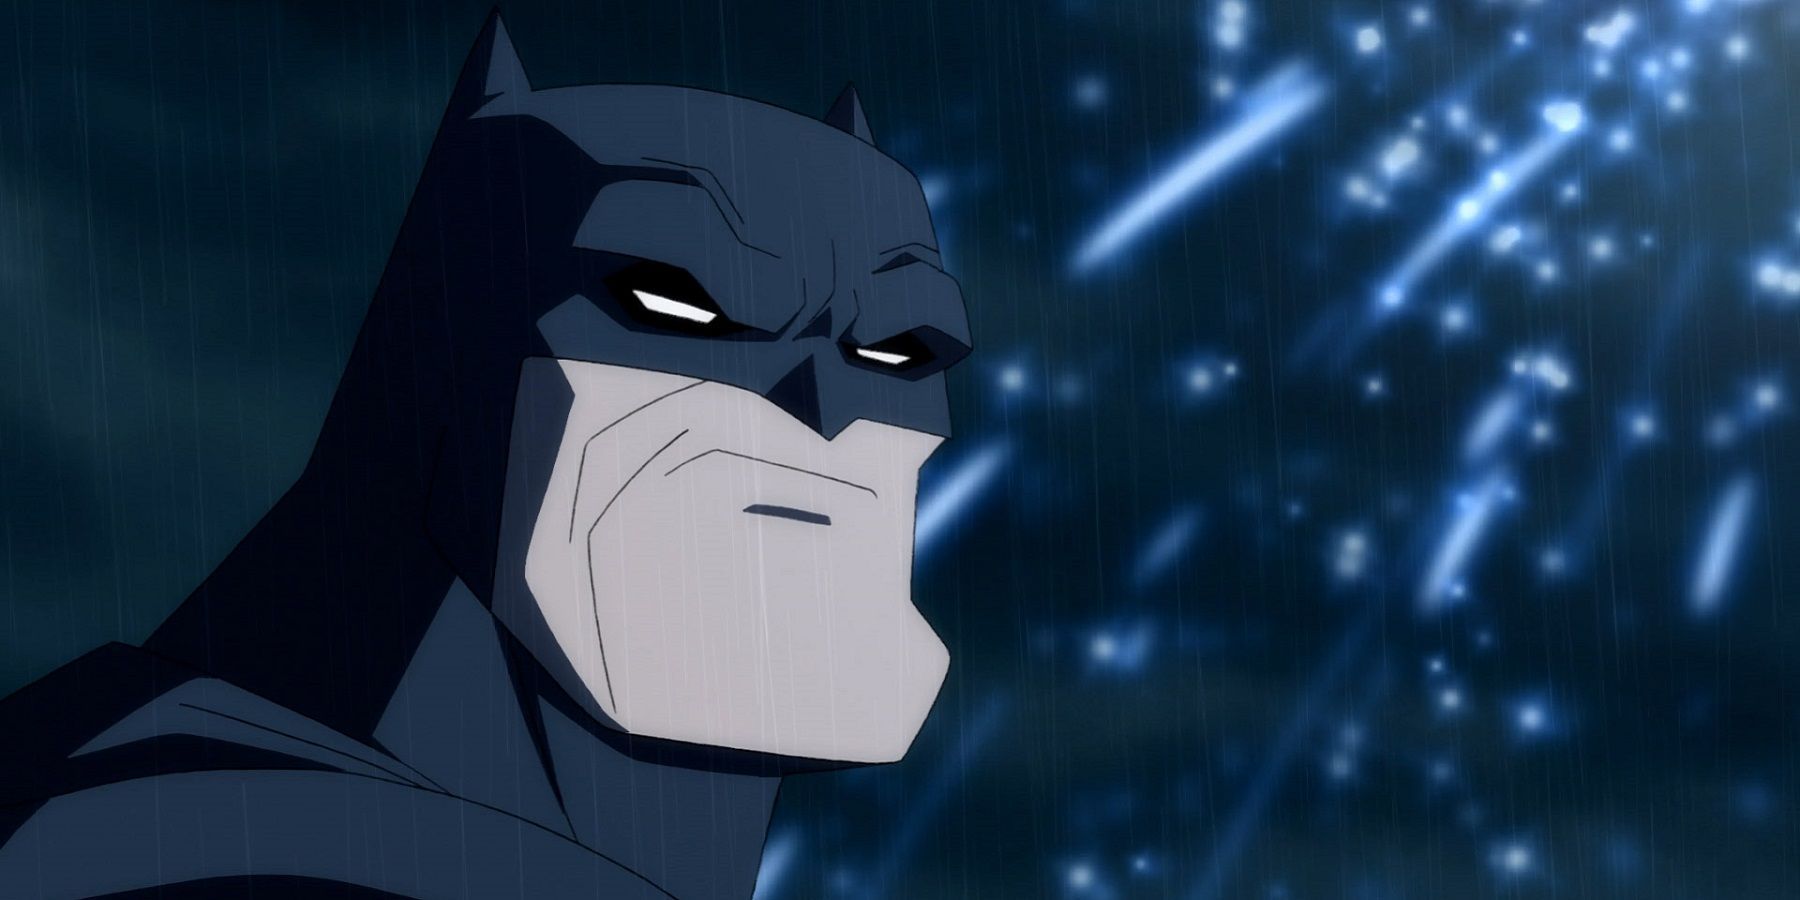 Batman looking serious in The Dark Knight Returns Part 1